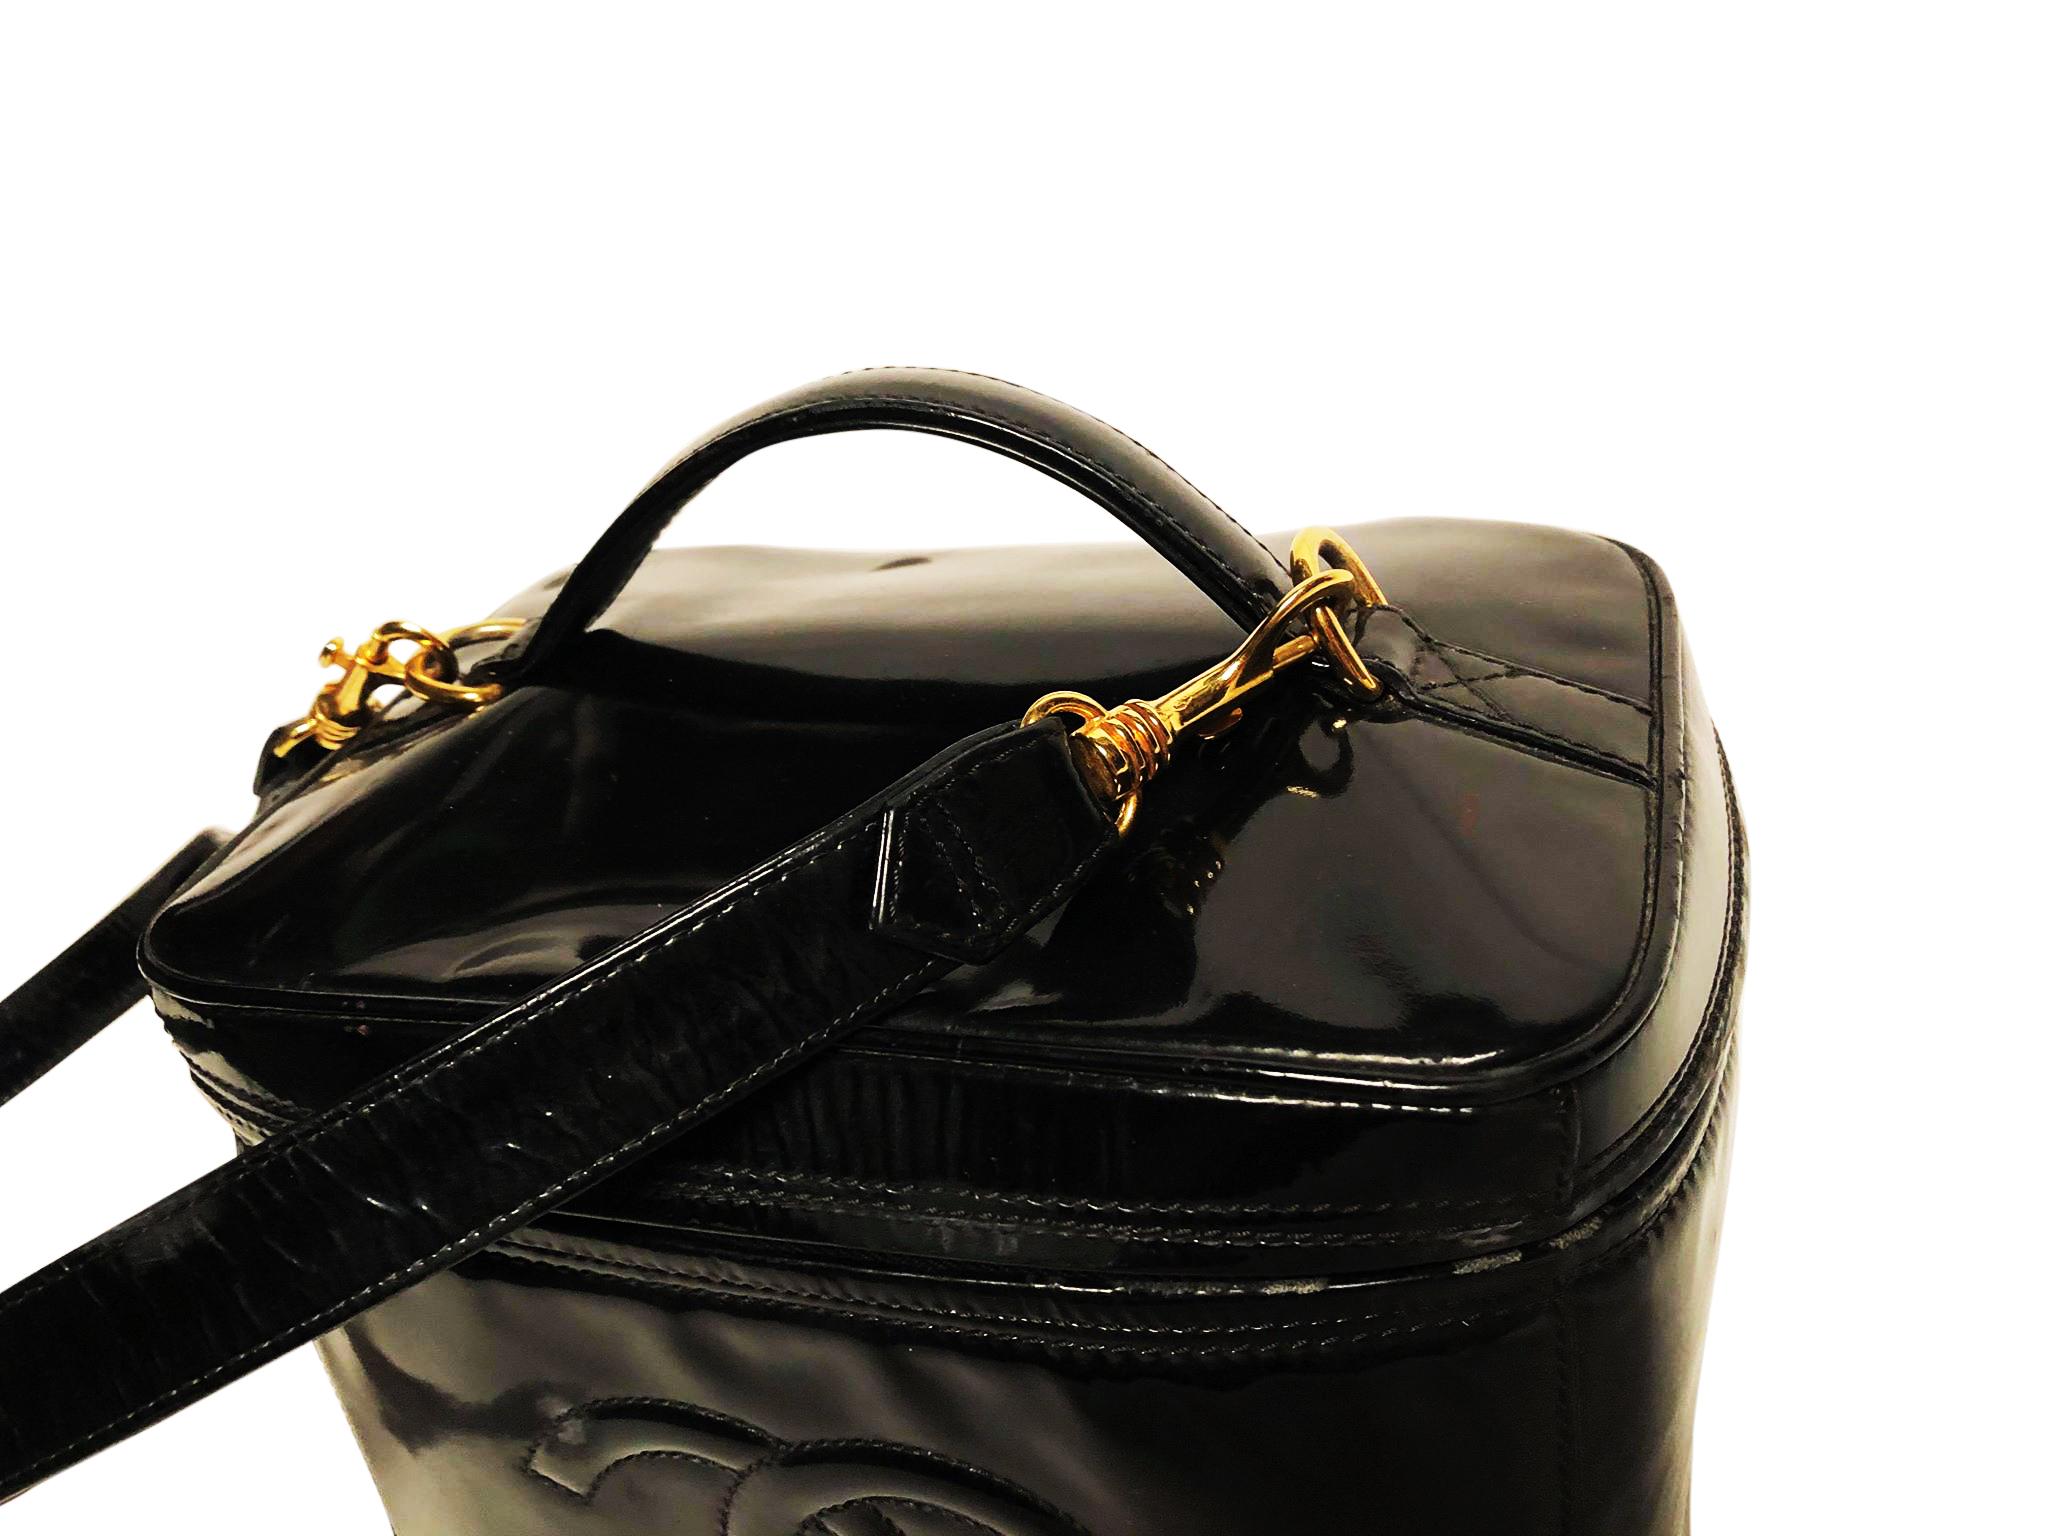 CHANEL Cosmetic Box Bag In Fair Condition For Sale In Melbourne, Victoria